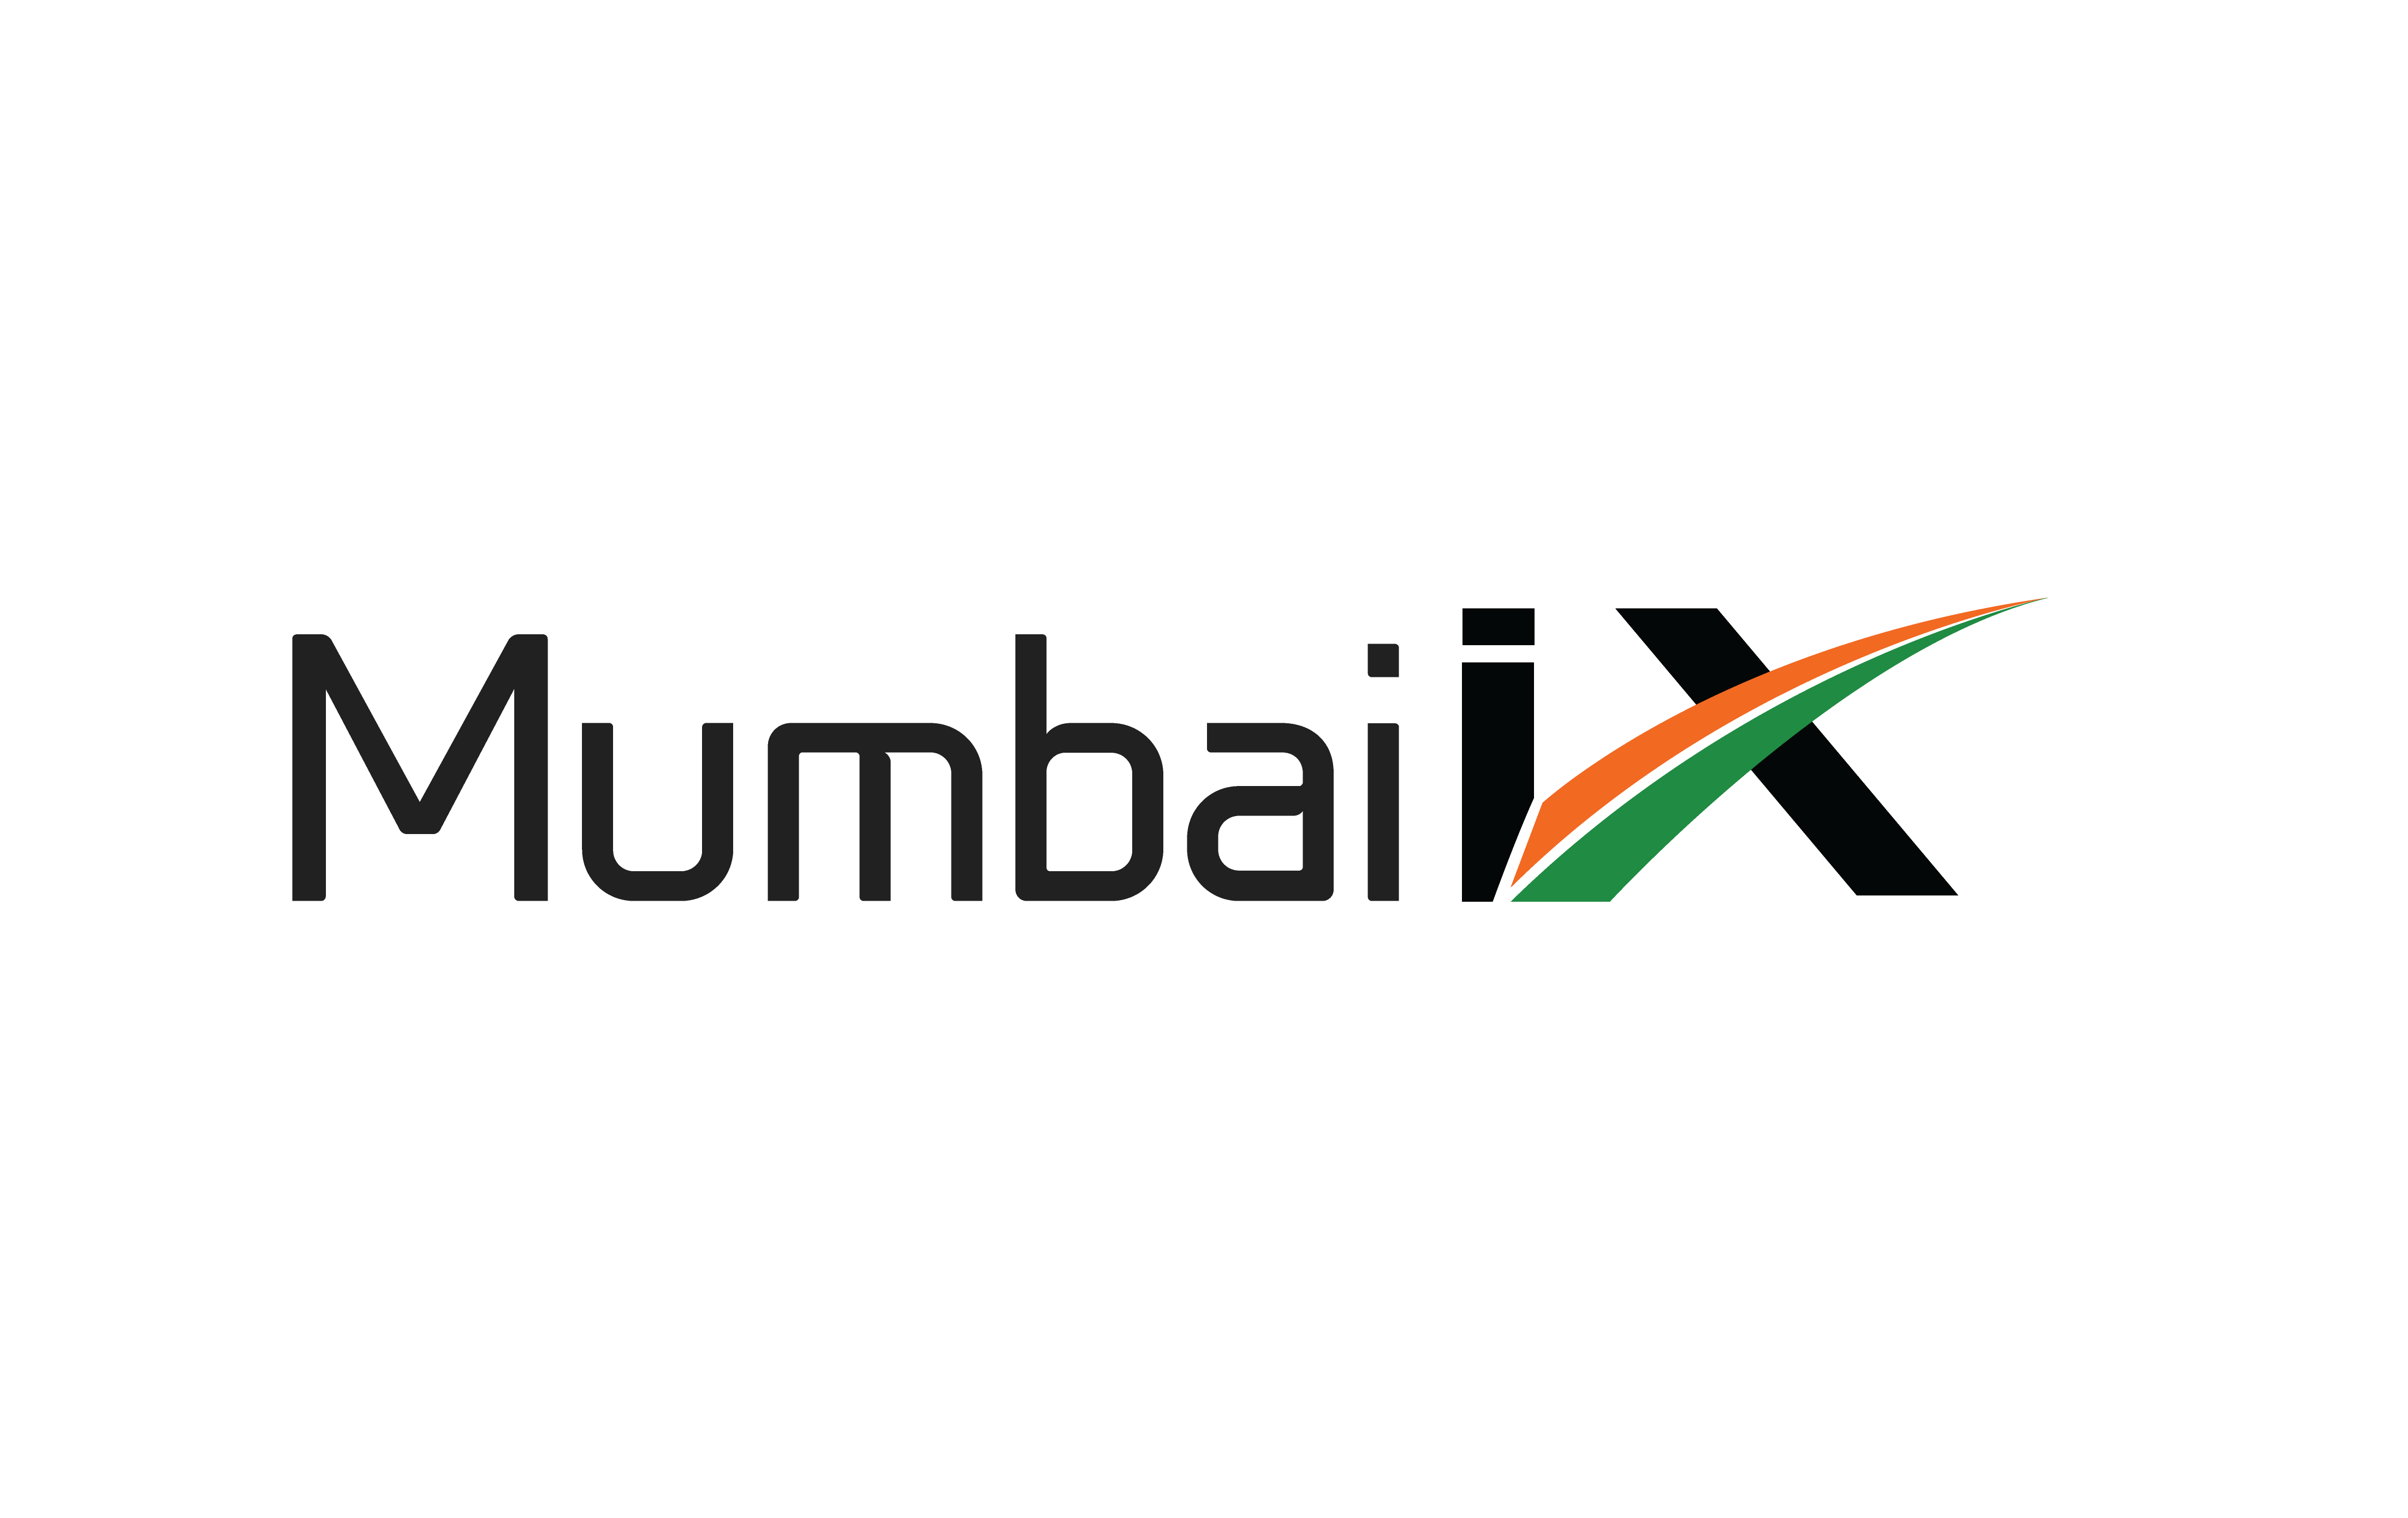 IX Logo - Mumbai IX Logo.png